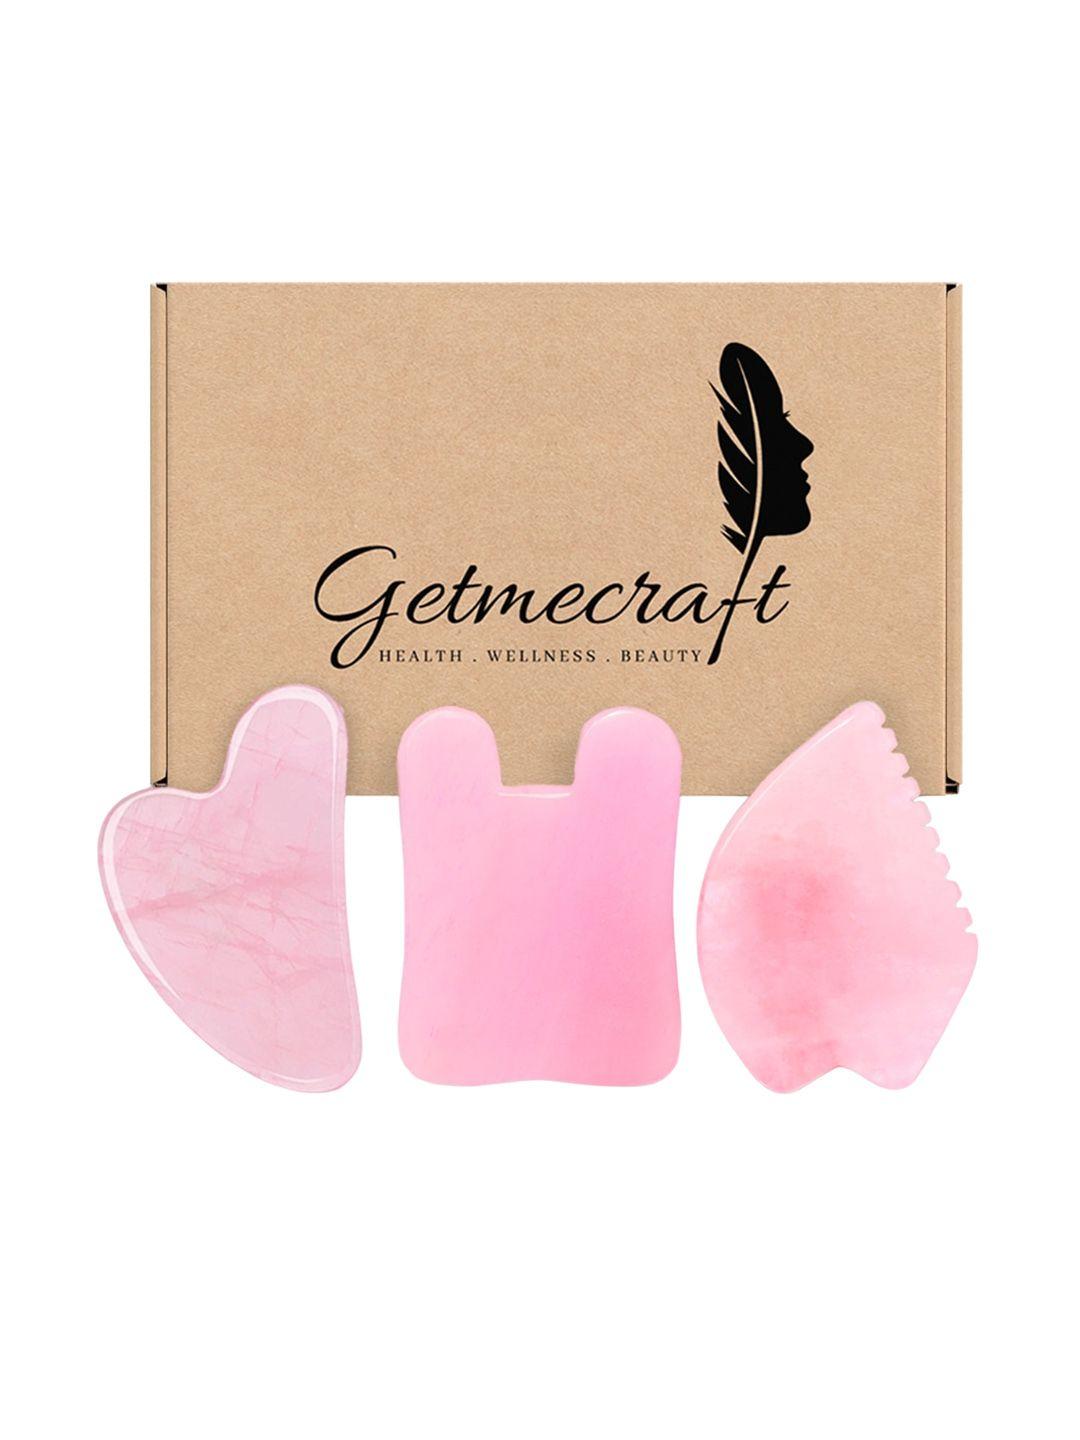 getmecraft 3-pcs rose quartz gua sha - leaf shape gua sha & rabbit ear shape gua sha